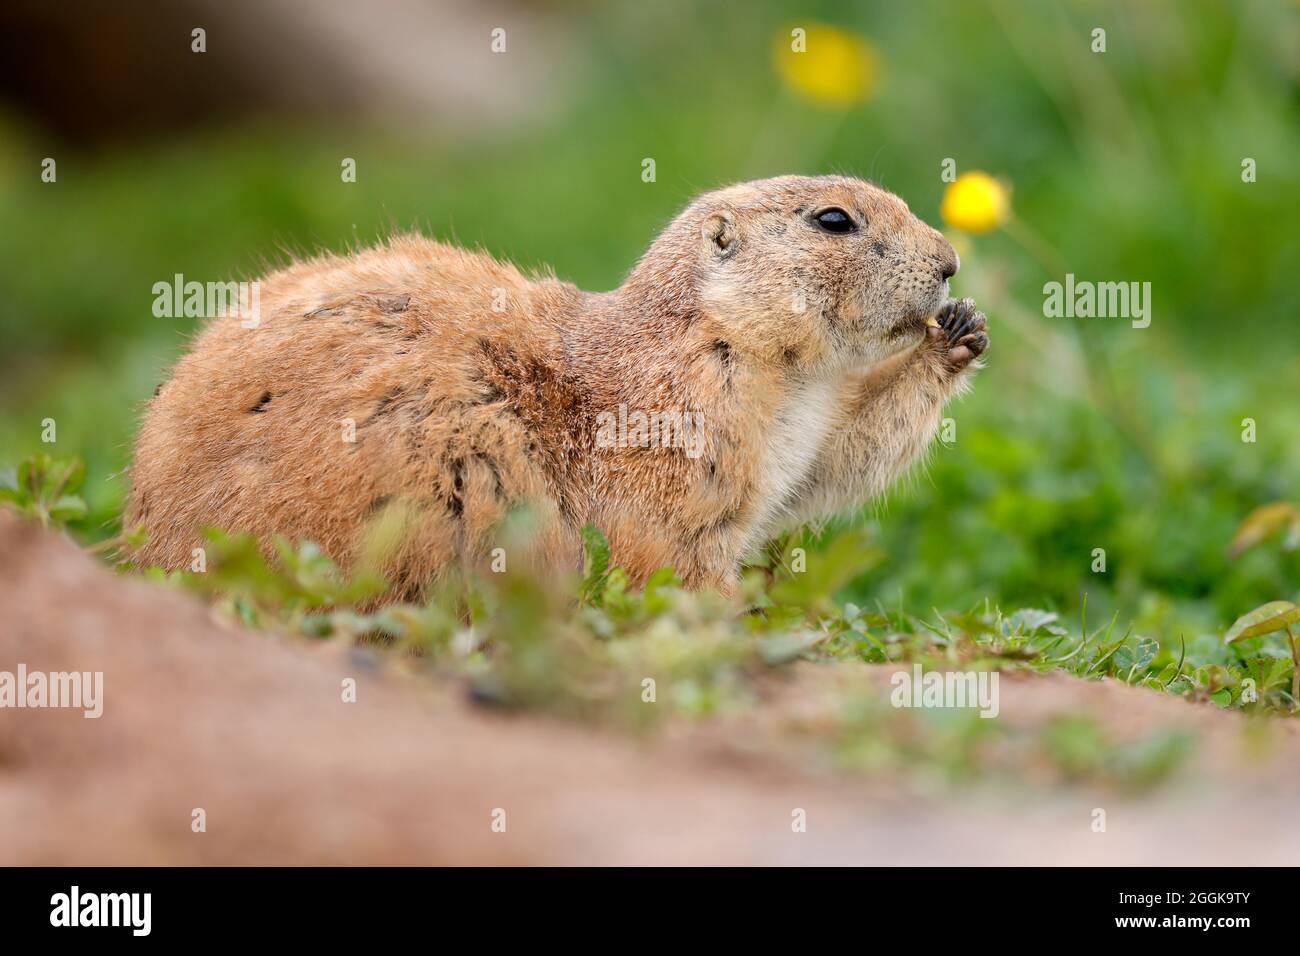 Black-tailed prairie dog (Cynomy ludovicianus) eating, Germany Stock Photo